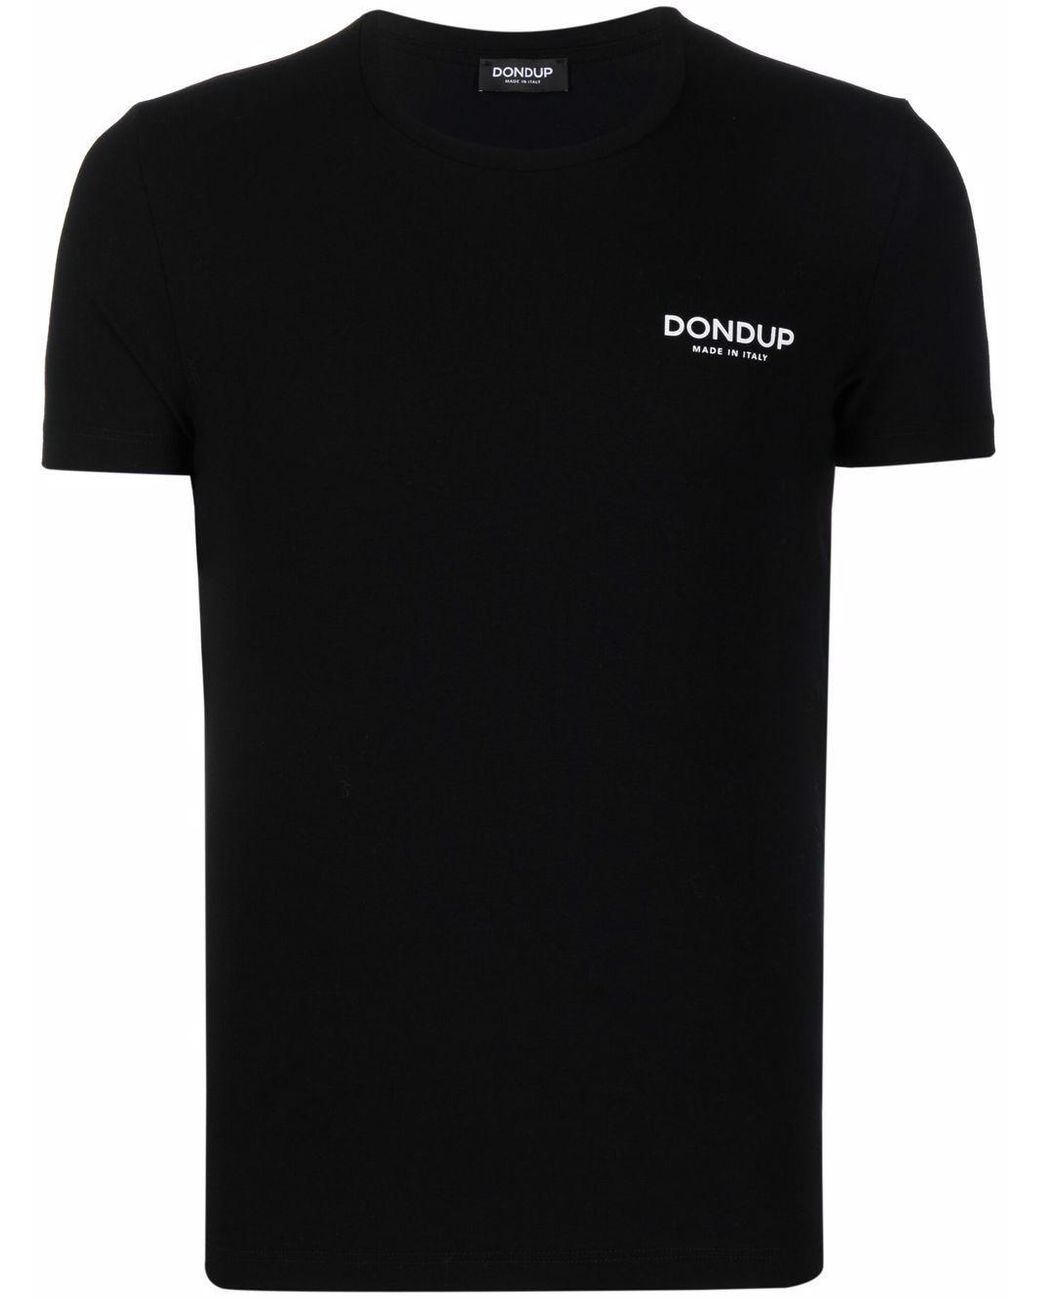 Dondup Cotton Logo-print T-shirt in Black for Men - Save 2% - Lyst